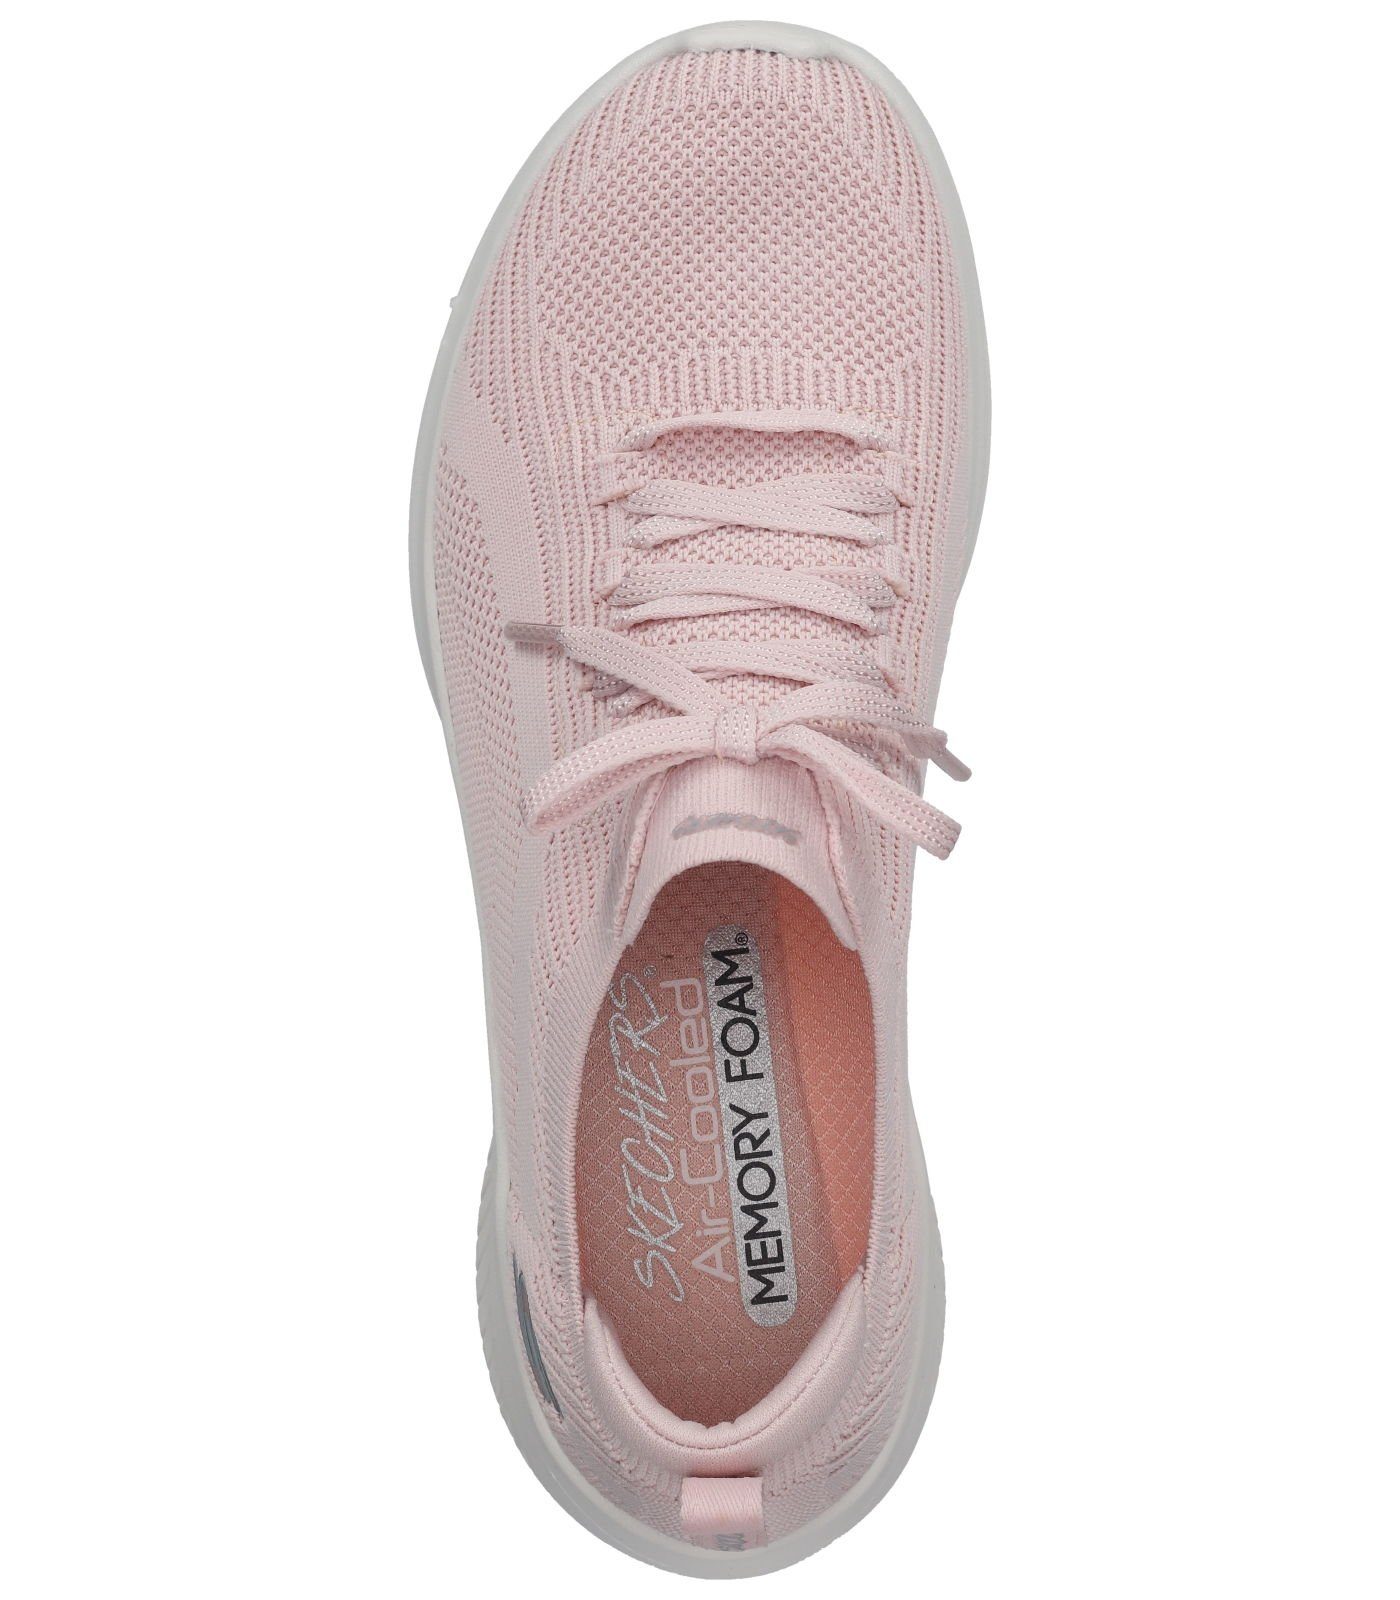 Textil Pink Sneaker Sneaker Skechers